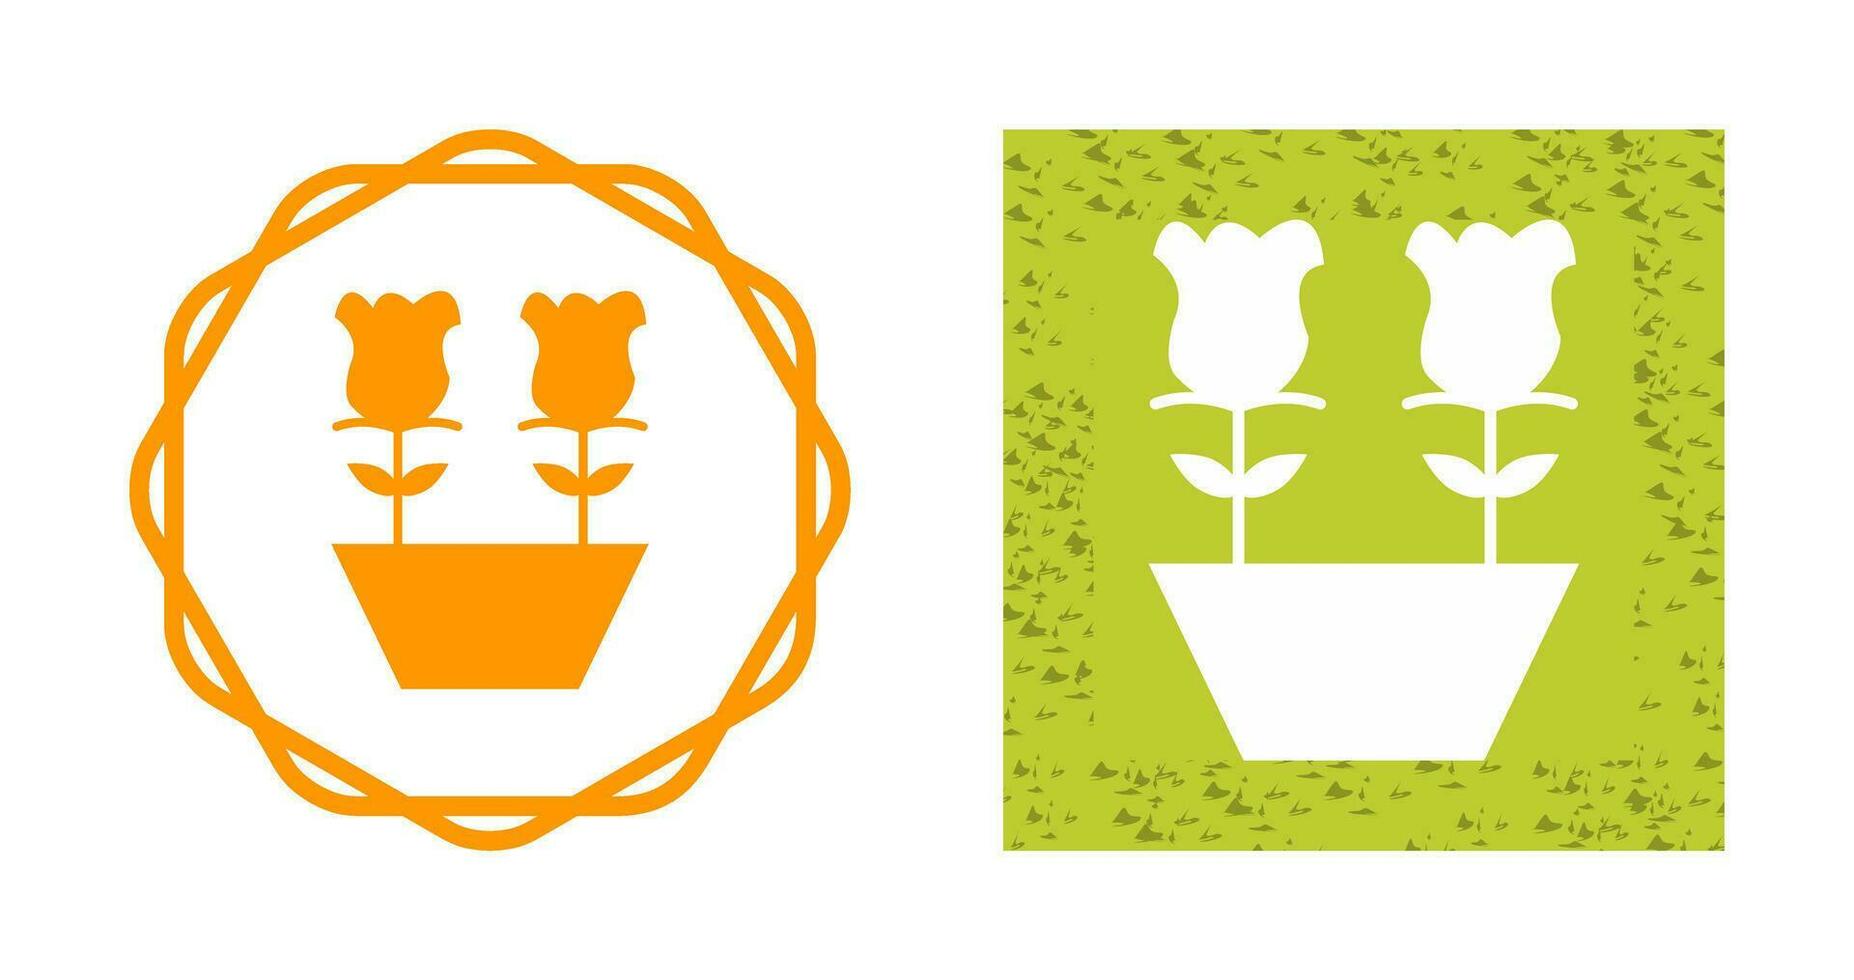 tulipes en icône de vecteur de pot